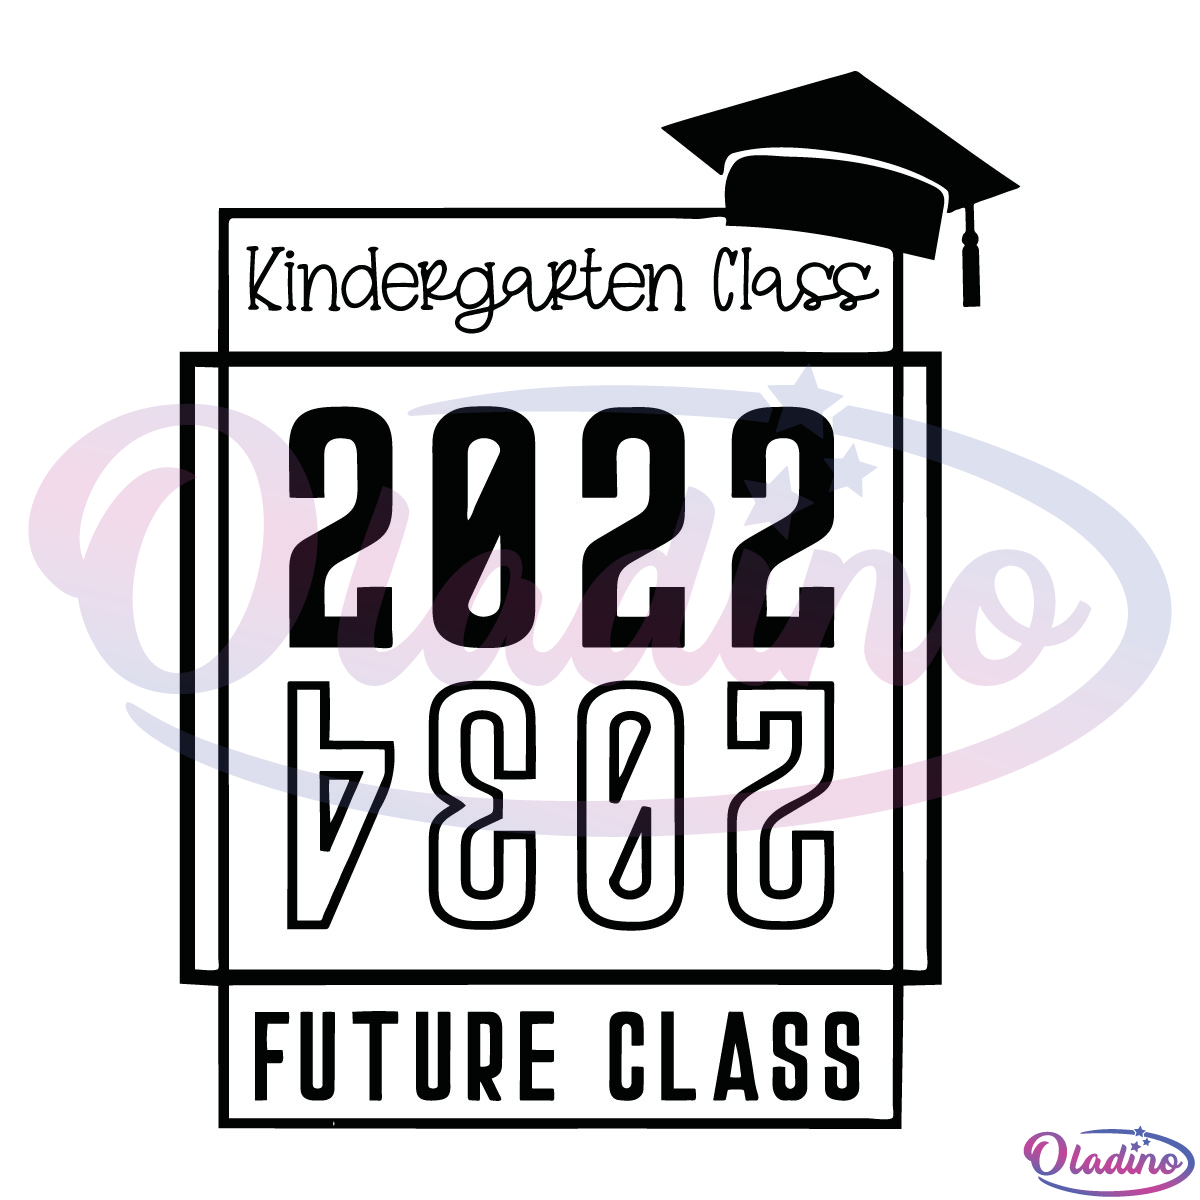 Kindergarten Class 2022 Graduation 2034 Future Class SVG Digital